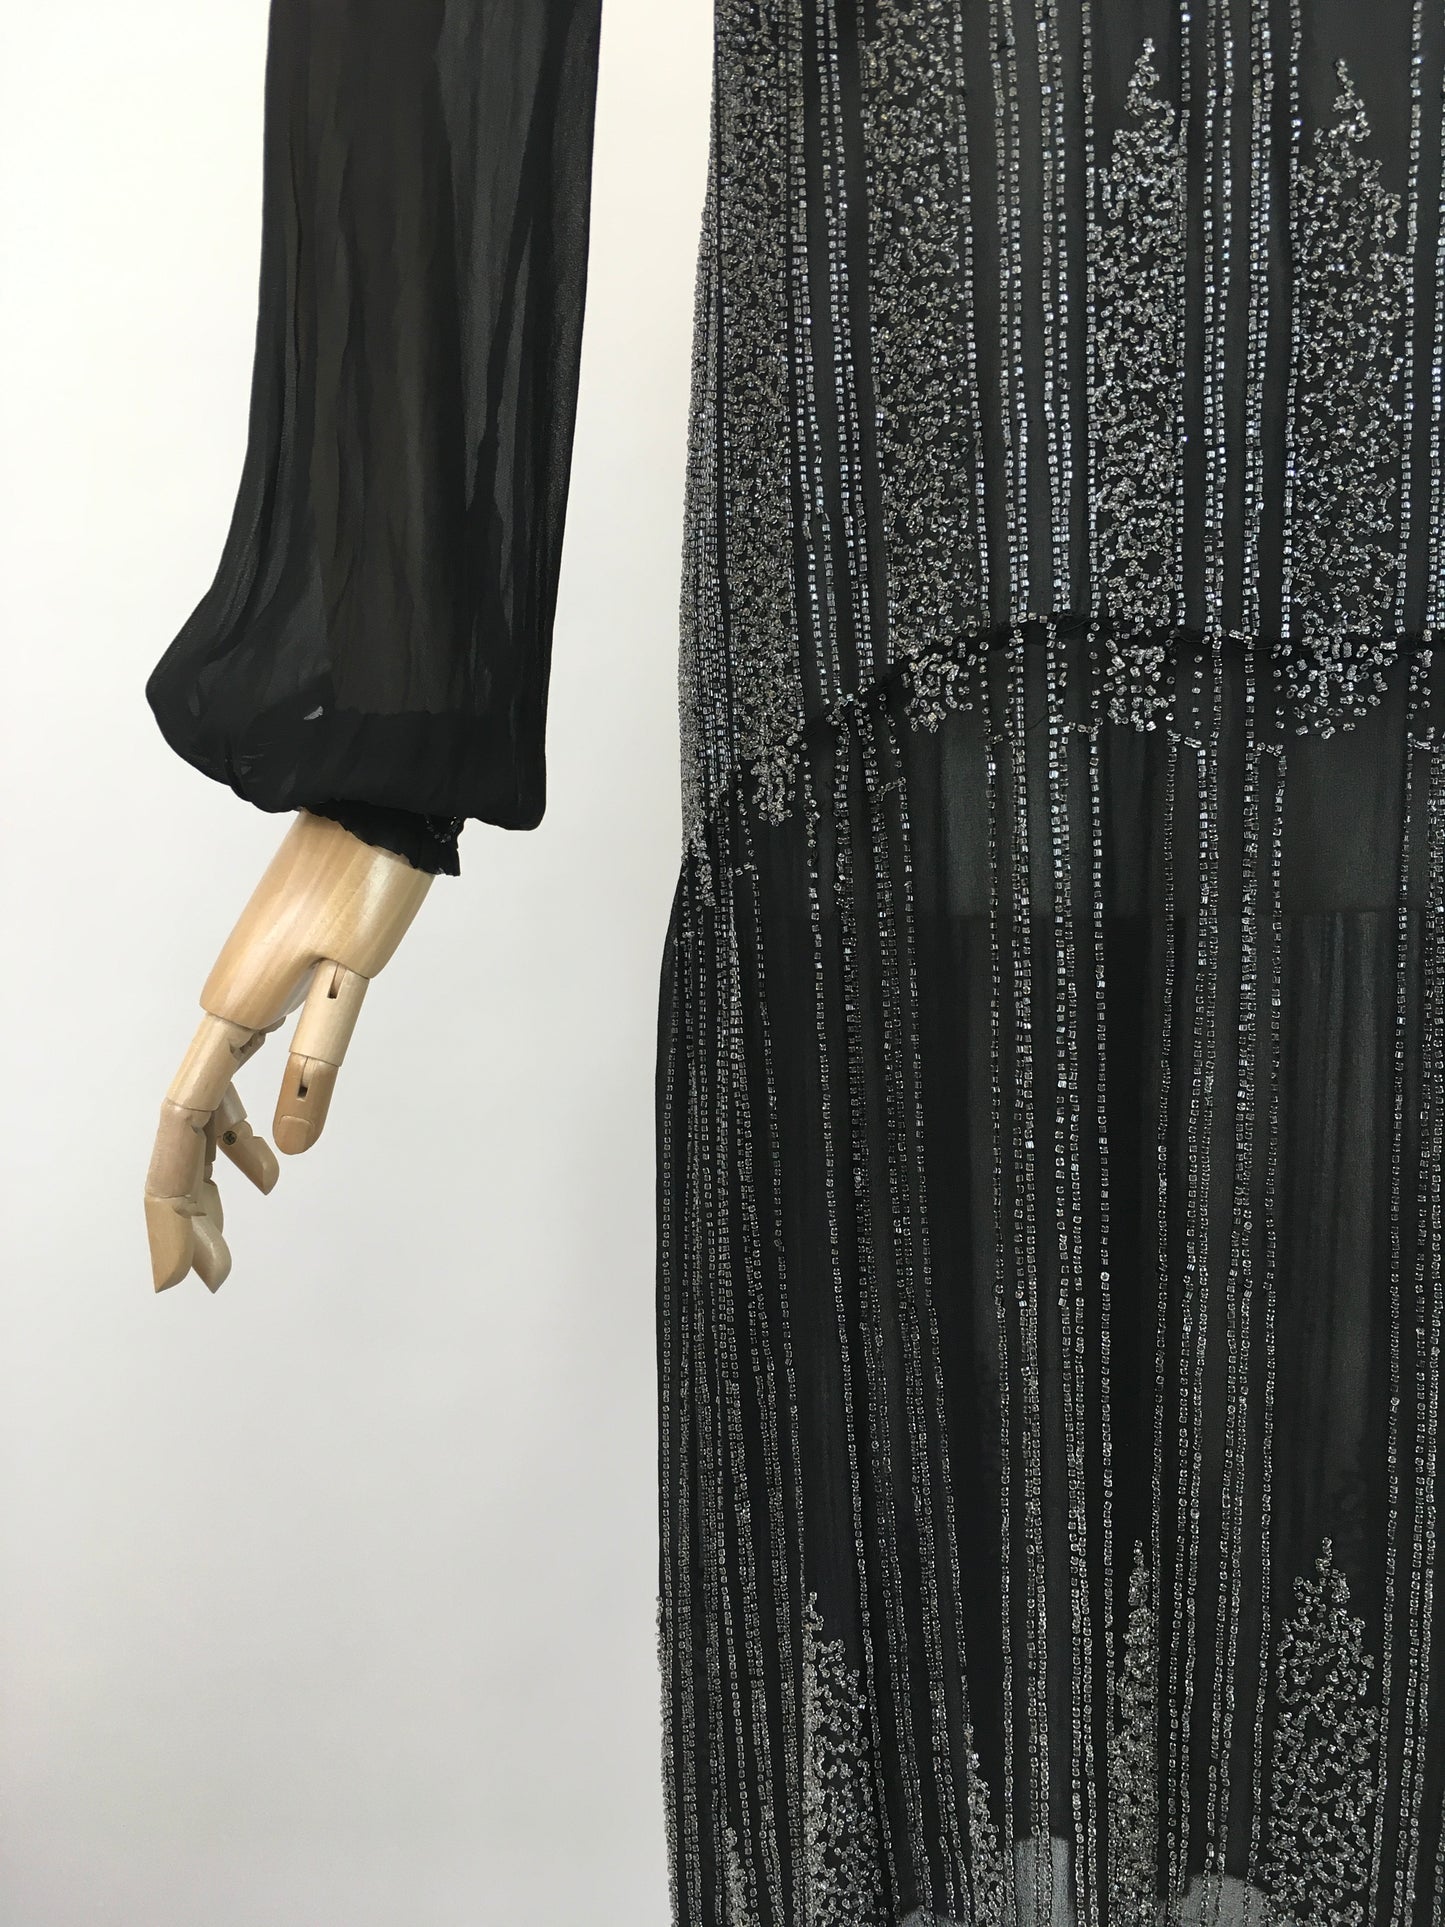 Original 1920's Sensational Beaded Dress - A Divine Example From the Era of the Flapper